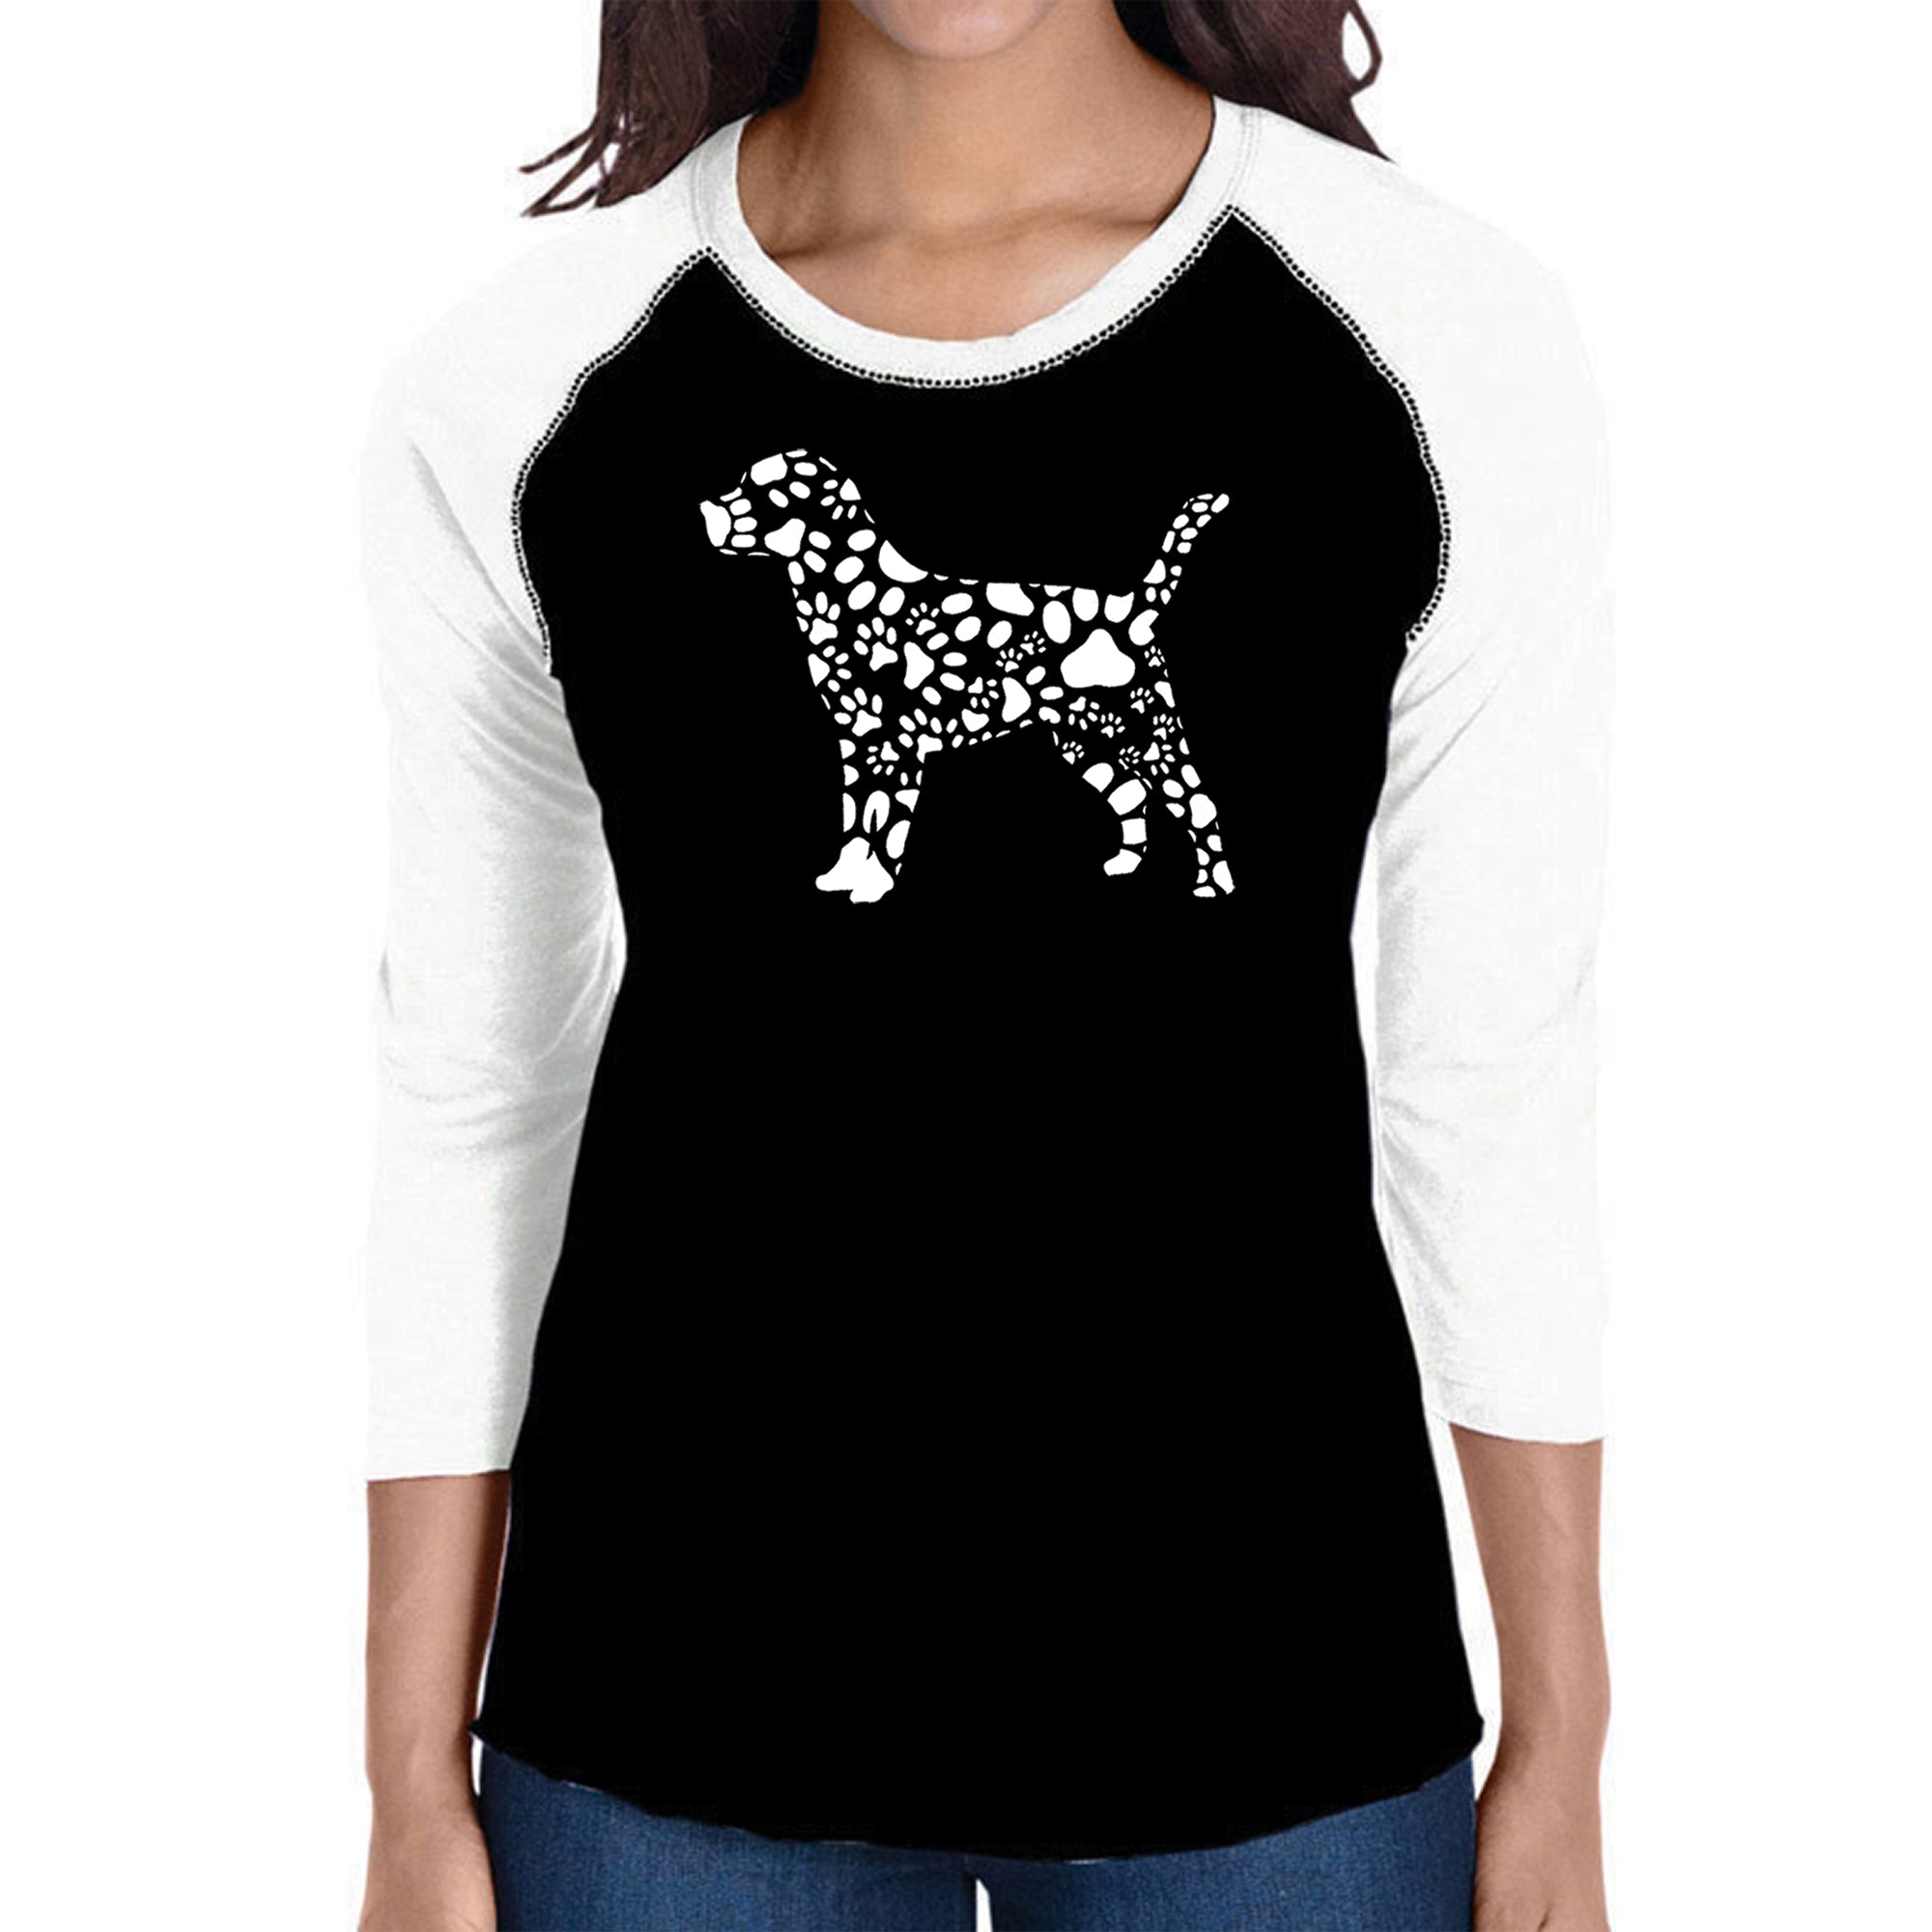 Dog Paw Prints - Women's Raglan Word Art T-Shirt - Black/White - Large